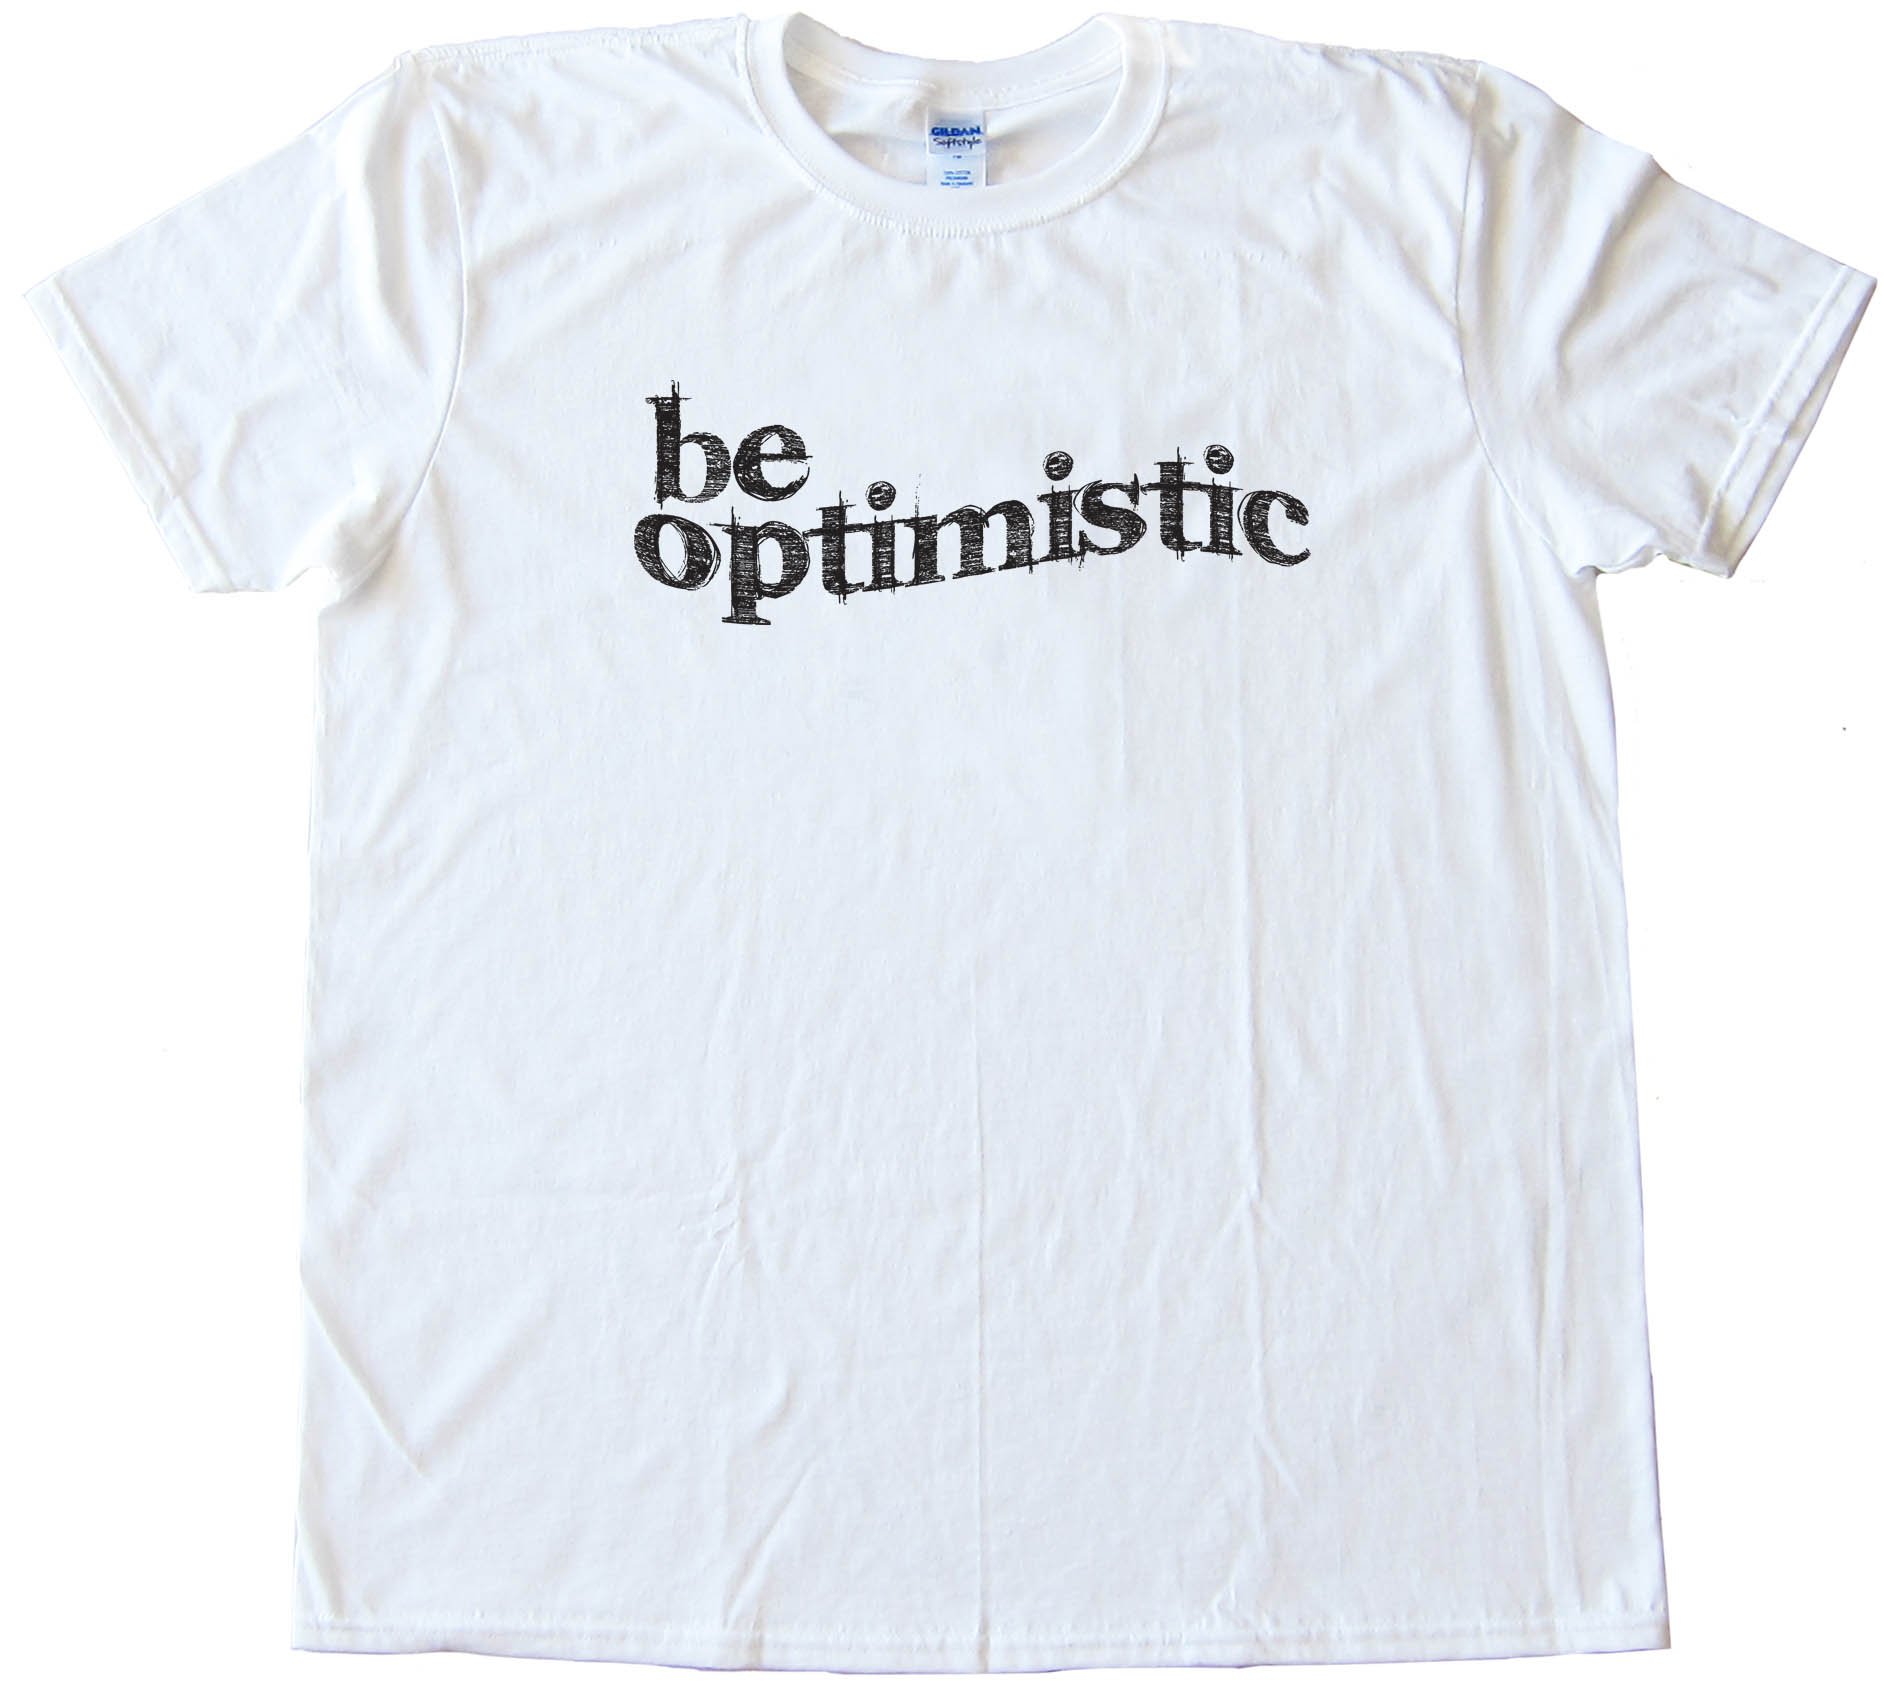 Be Optimistic - Tee Shirt